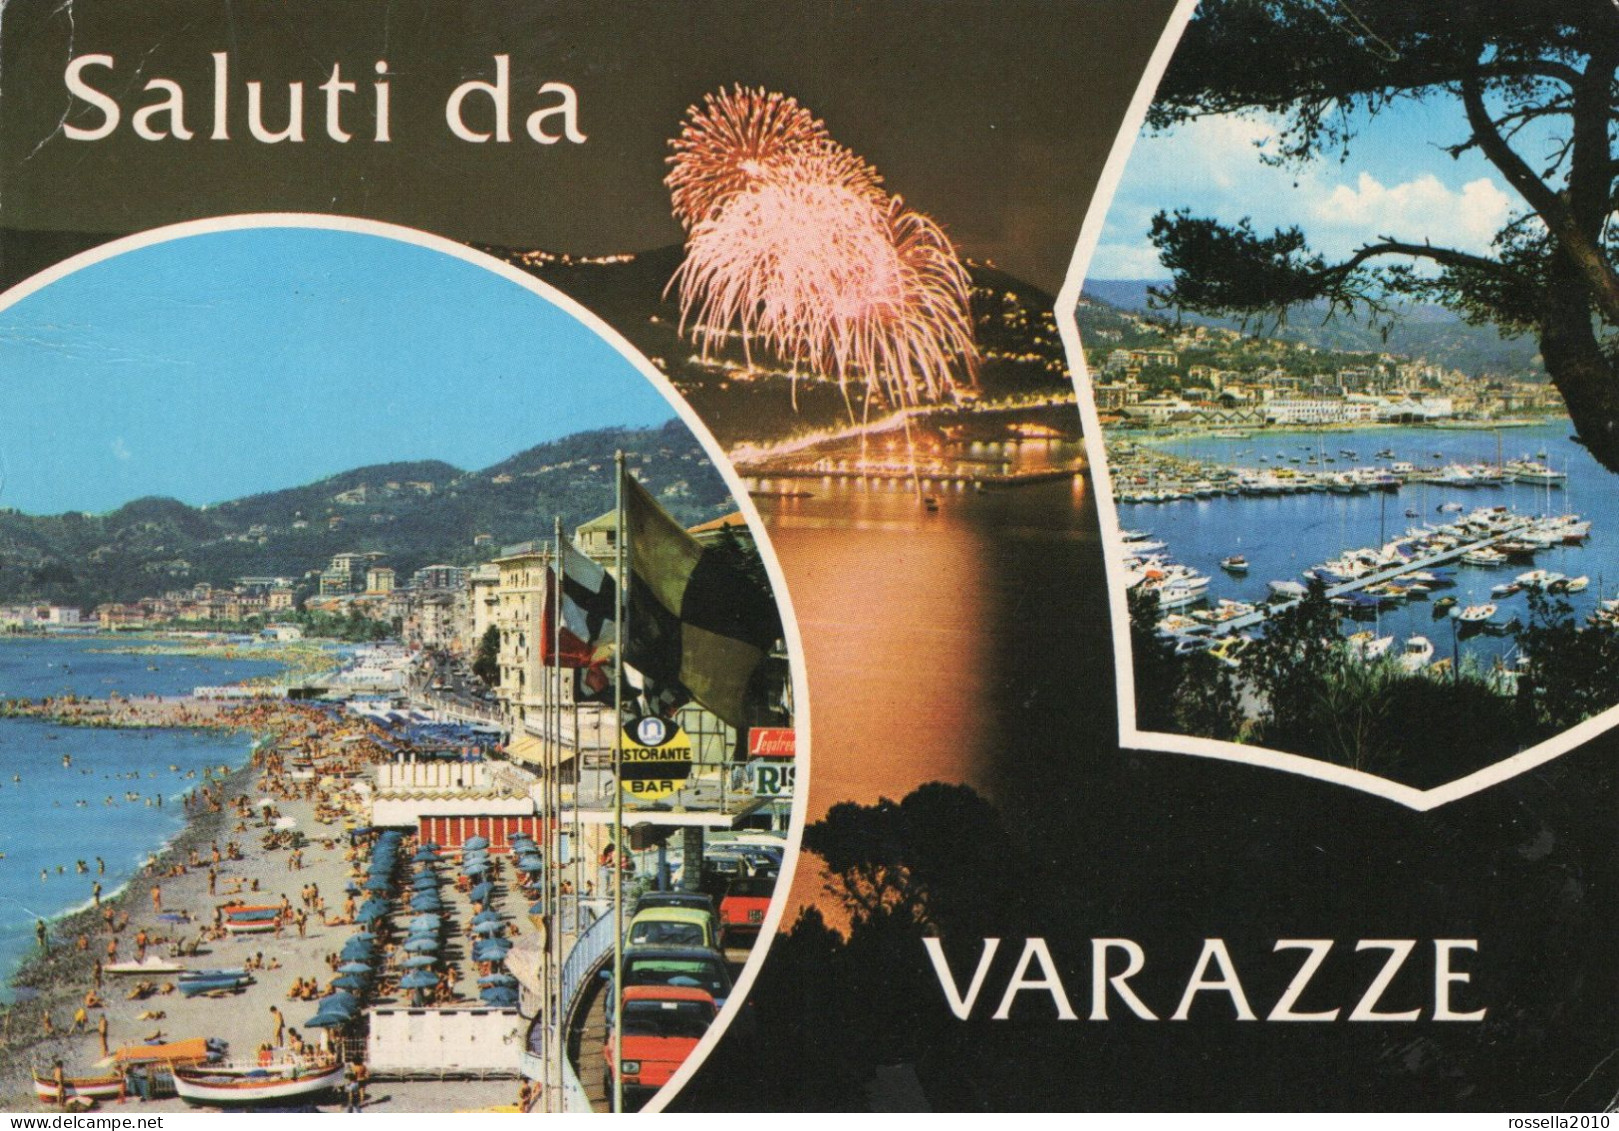 CARTOLINA 1985 ITALIA SAVONA VARAZZE SALUTI VEDUTINE Italy Postcard ITALIEN Ansichtskarten - Greetings From...